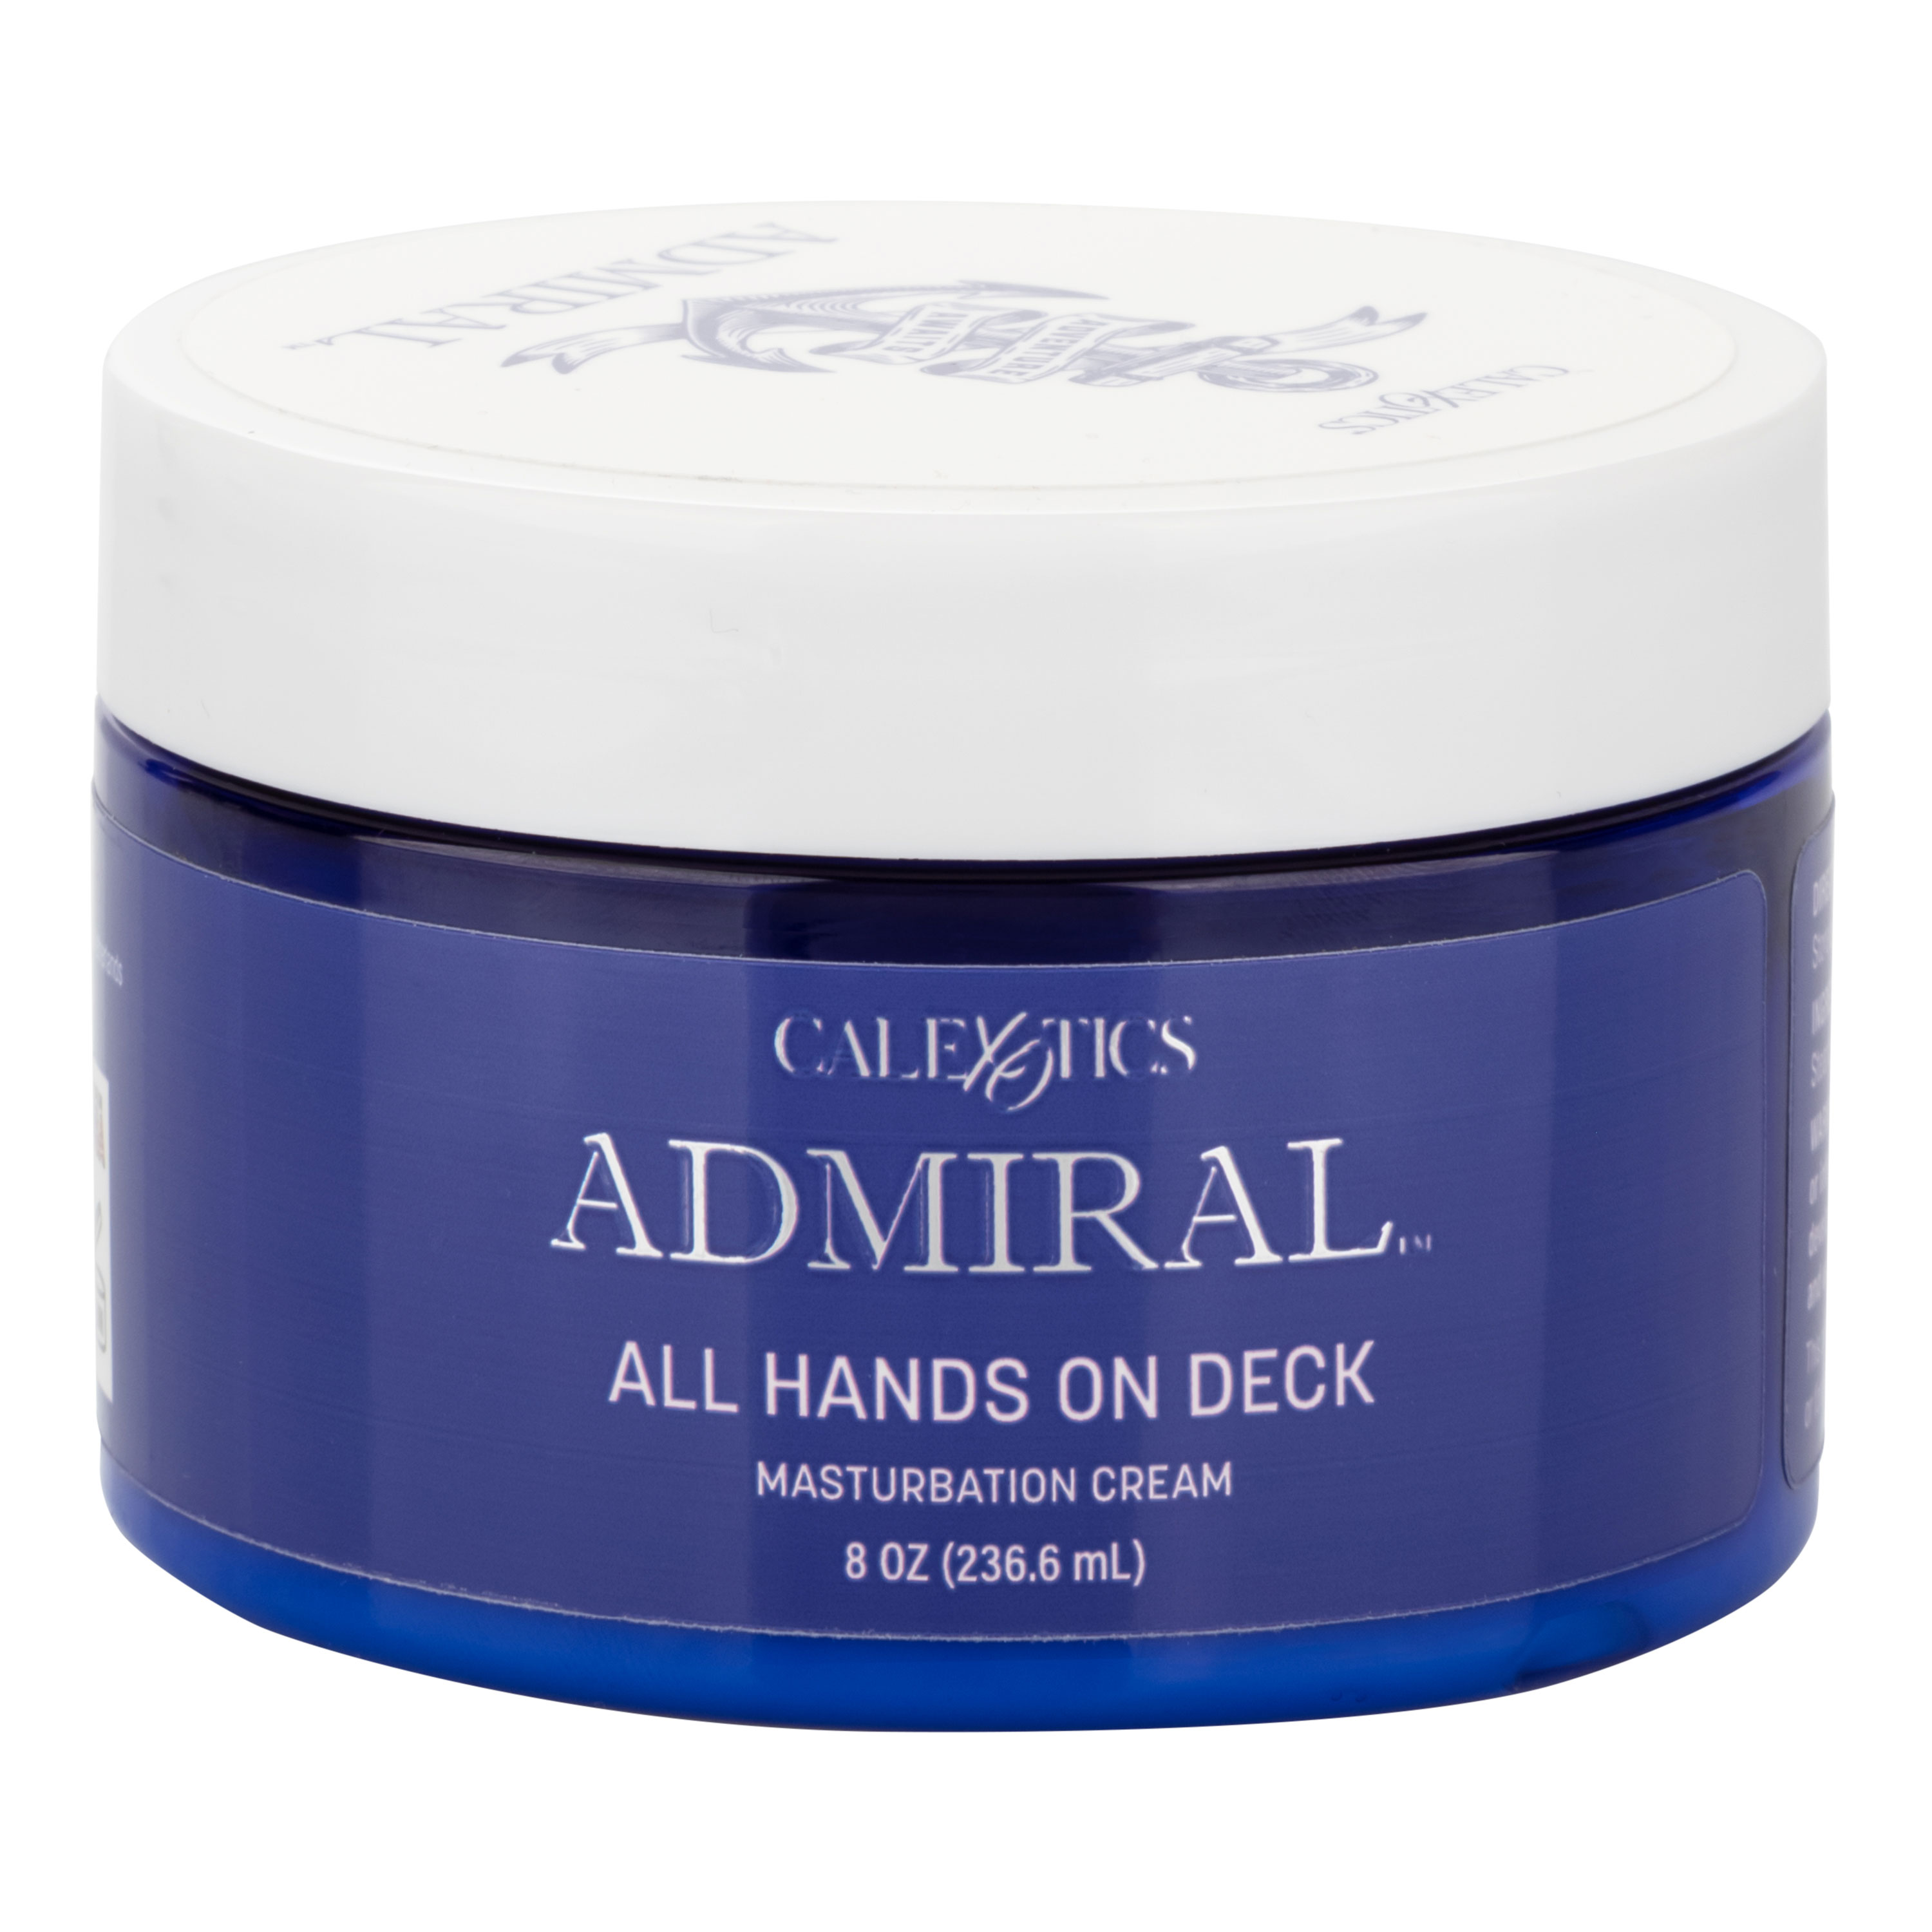 admiral all hands on deck masturbation cream  oz 